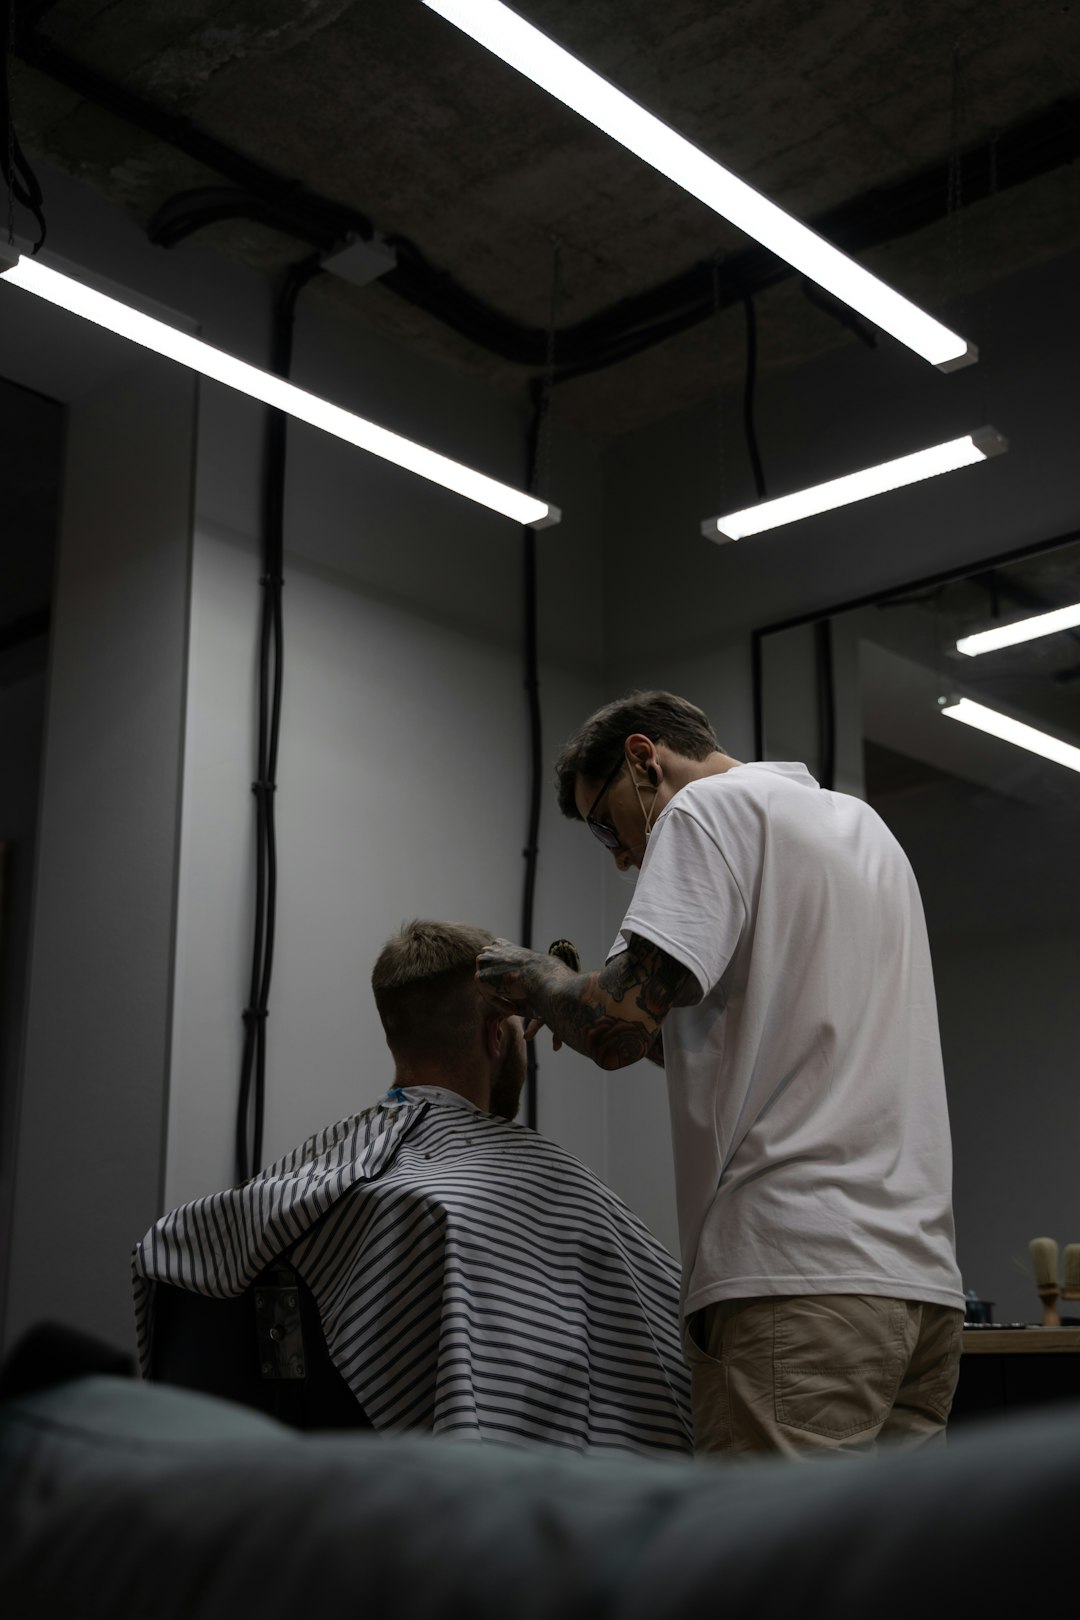 man in white shirt cutting hair of man in black and white stripe shirt